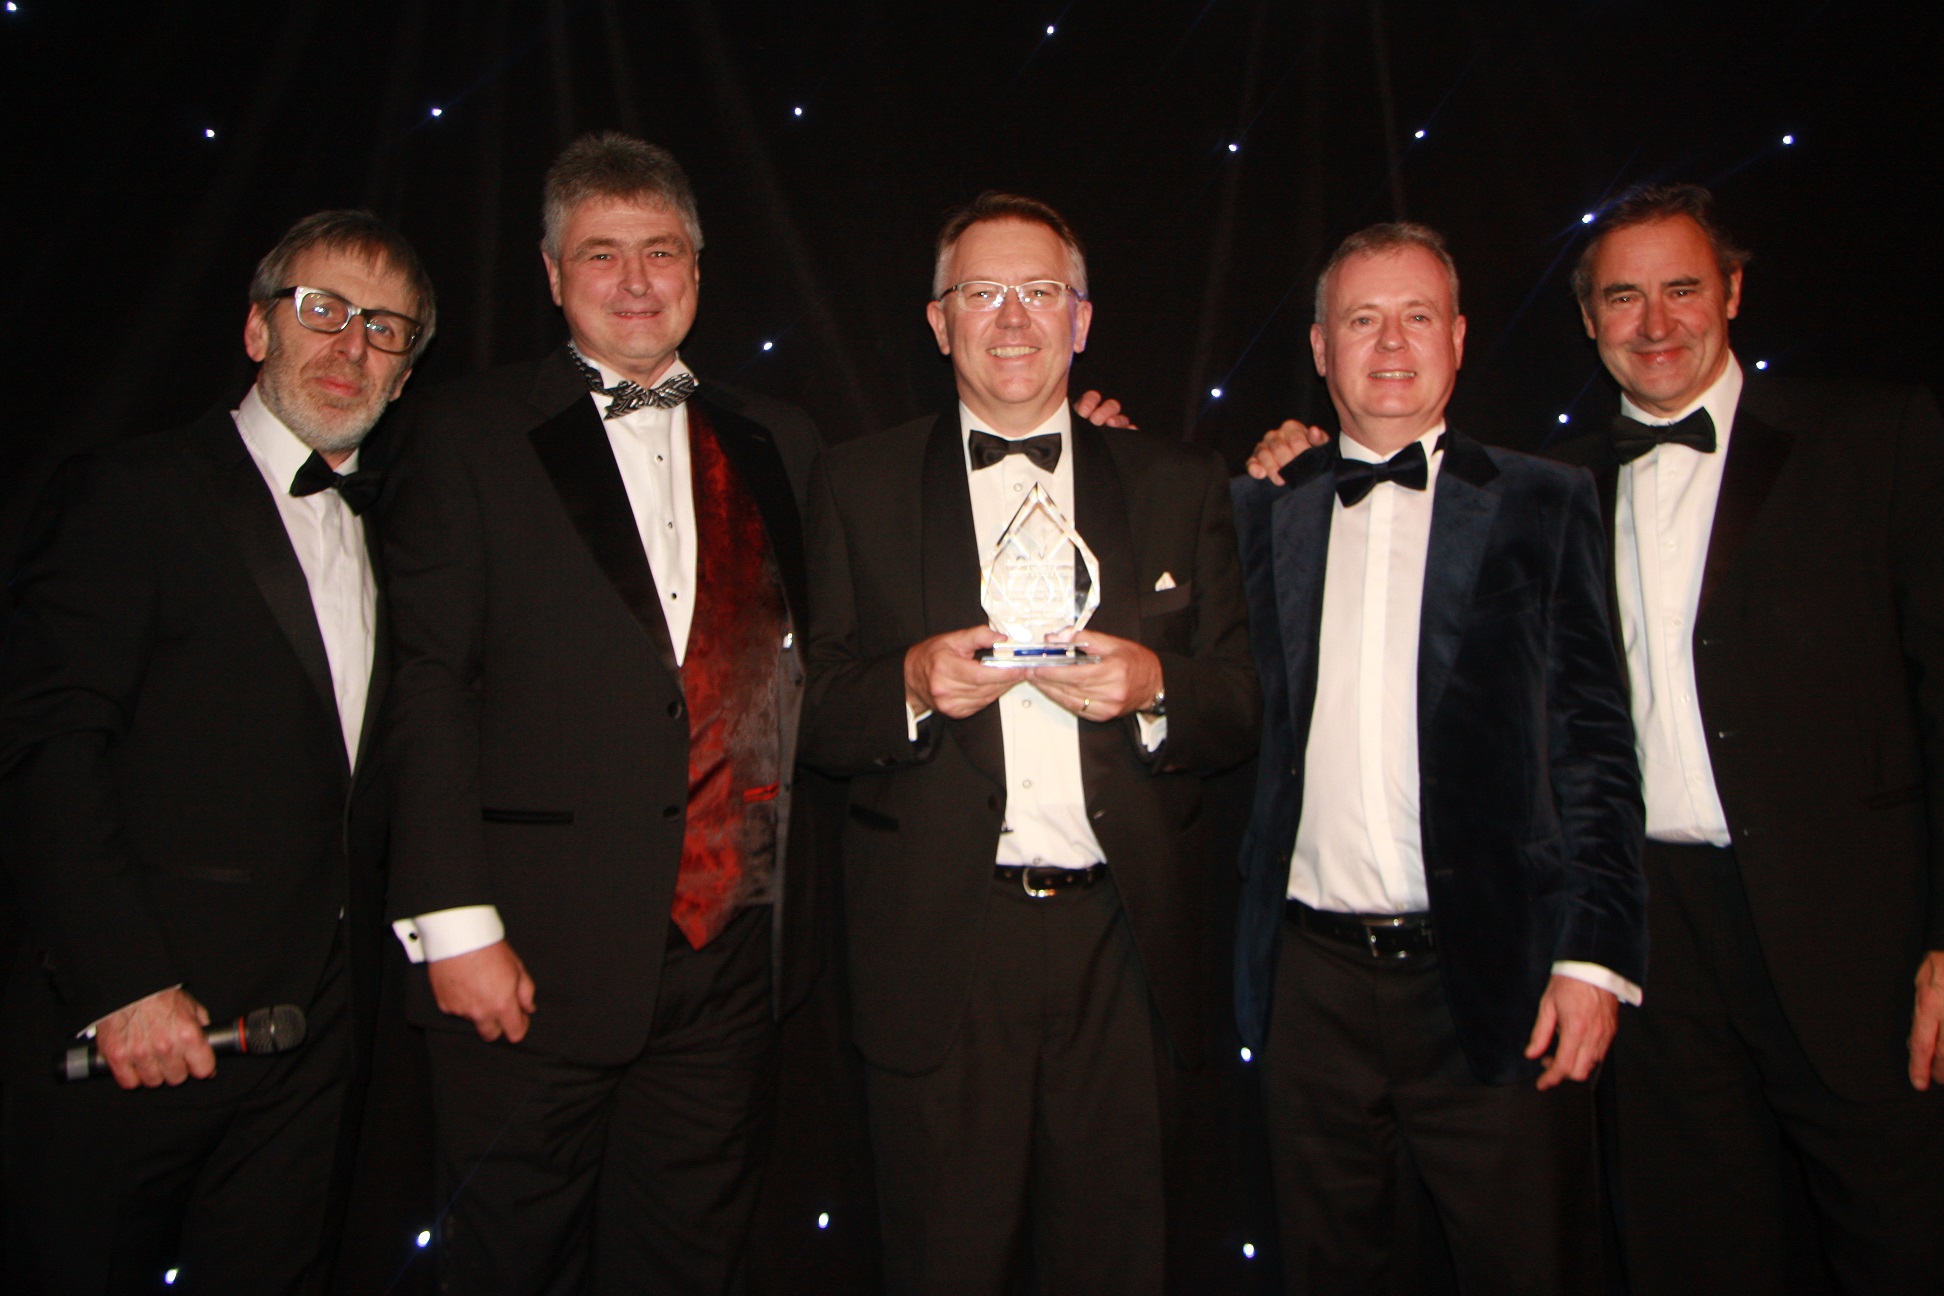 RIB CCS UK team accepting award